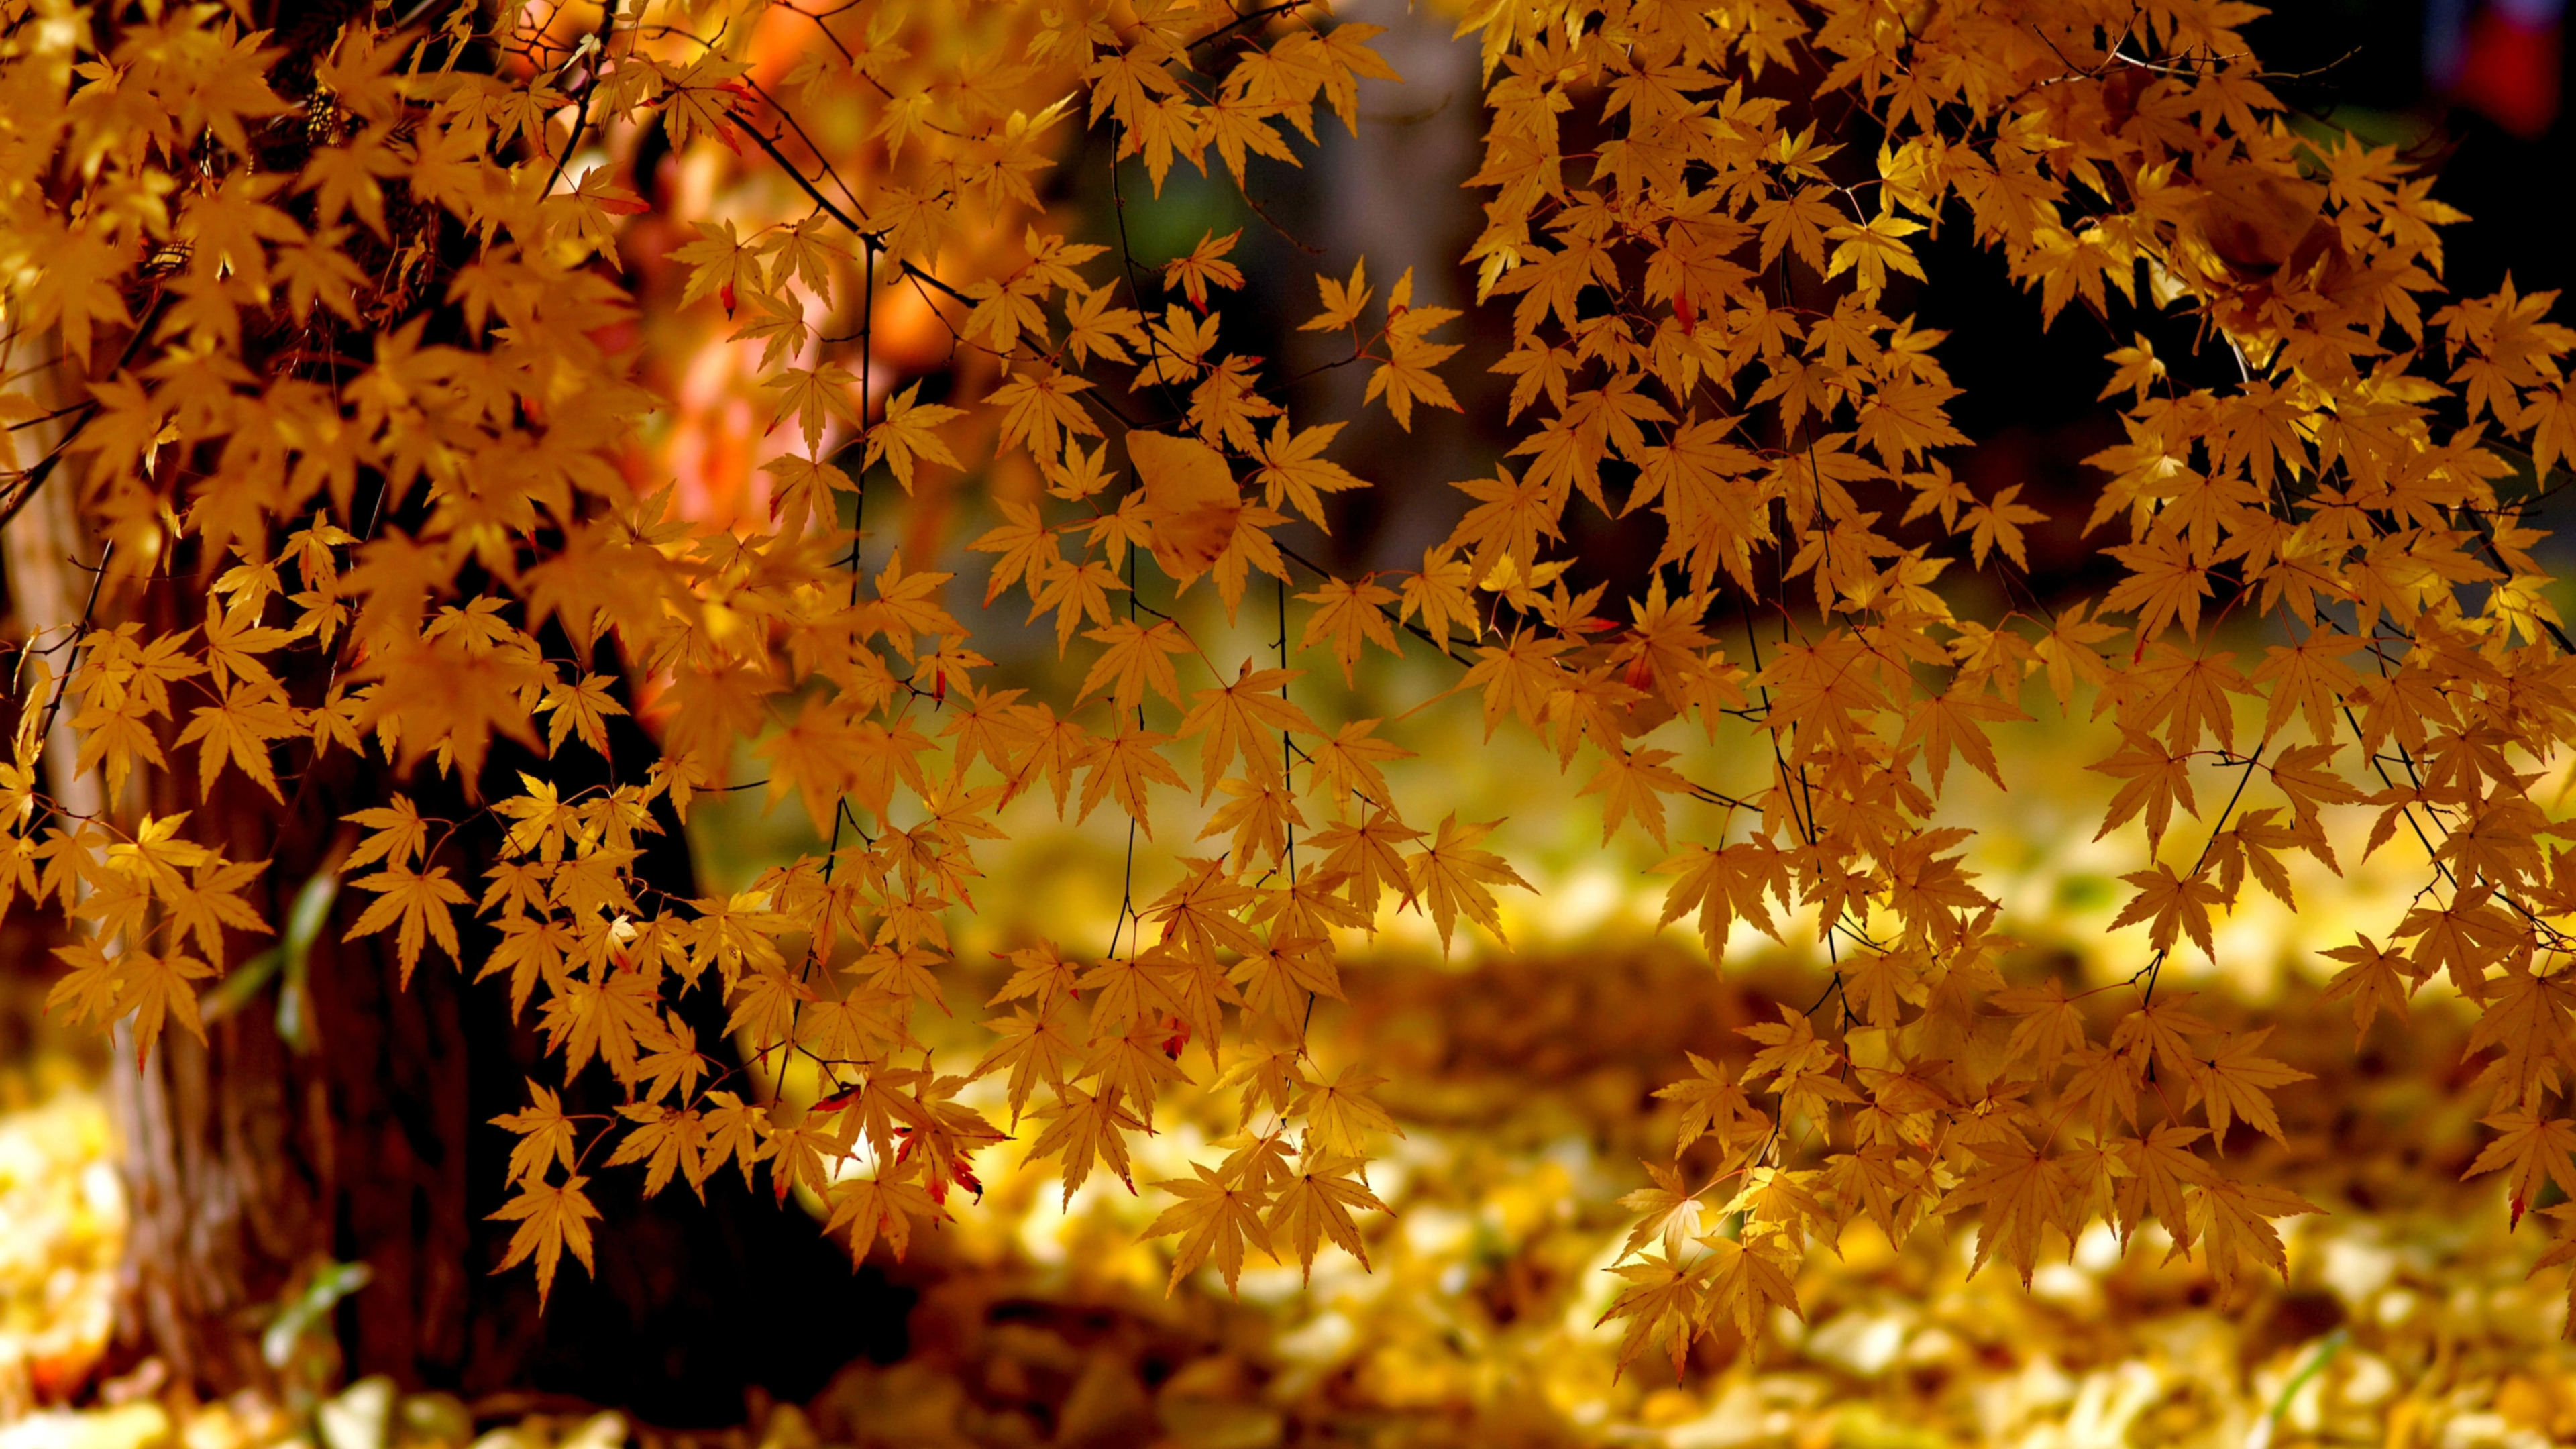 Autumn desktop, 4K ultra HD, Fall vibes, Nature at its finest, 3840x2160 4K Desktop